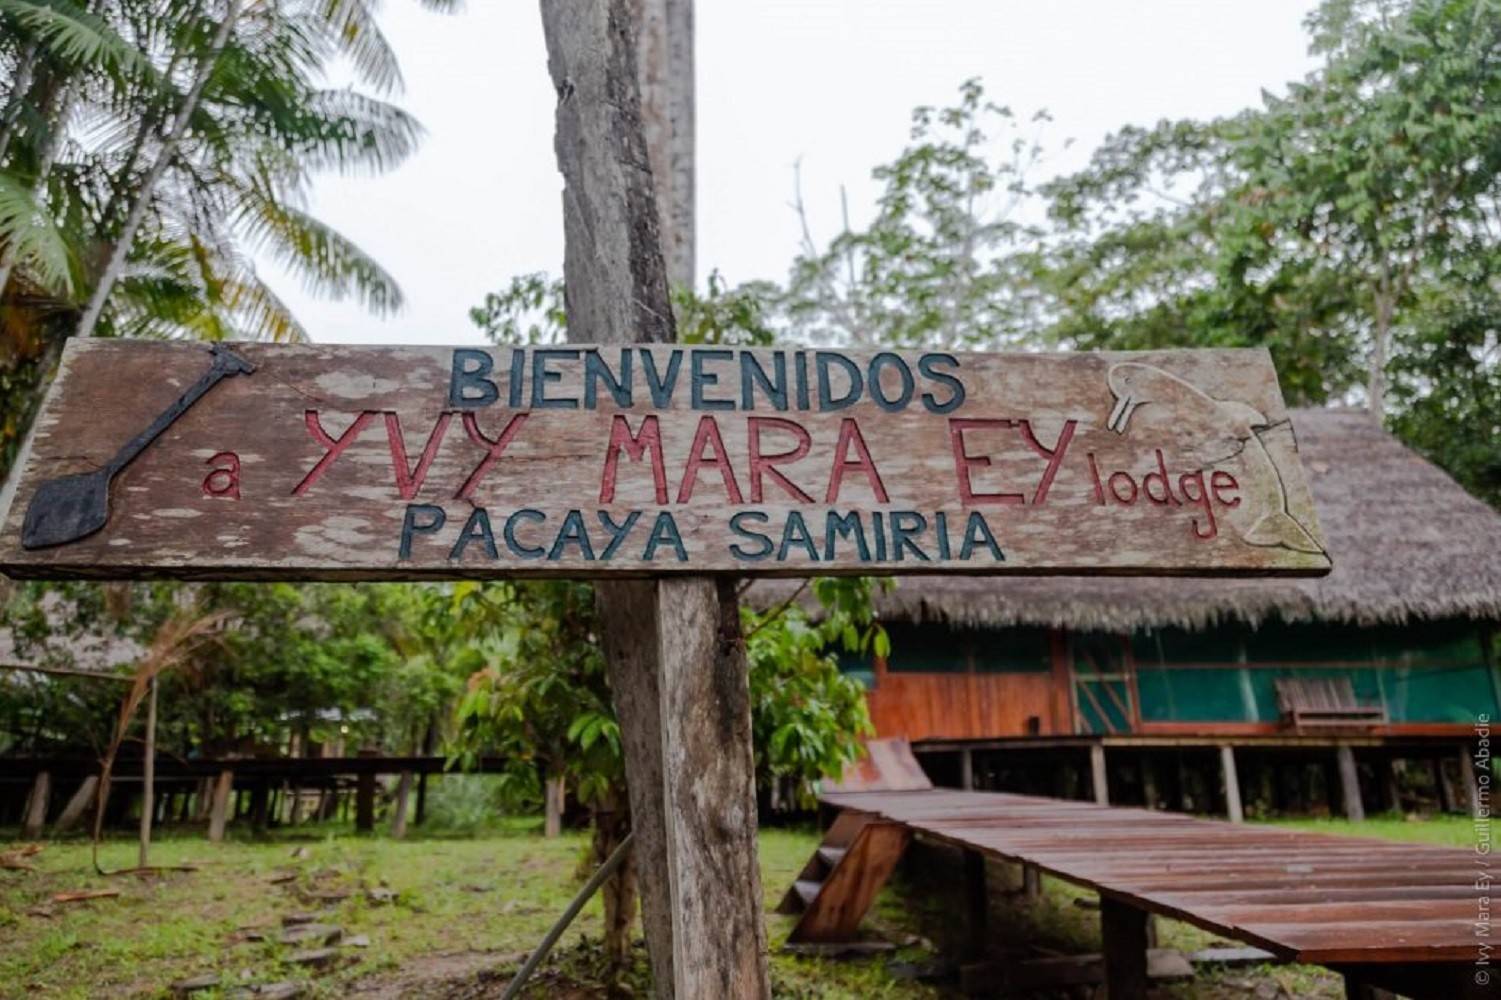 Iquitos - Ivy Mara Ey - Reserva Nacional Pacaya Samiria